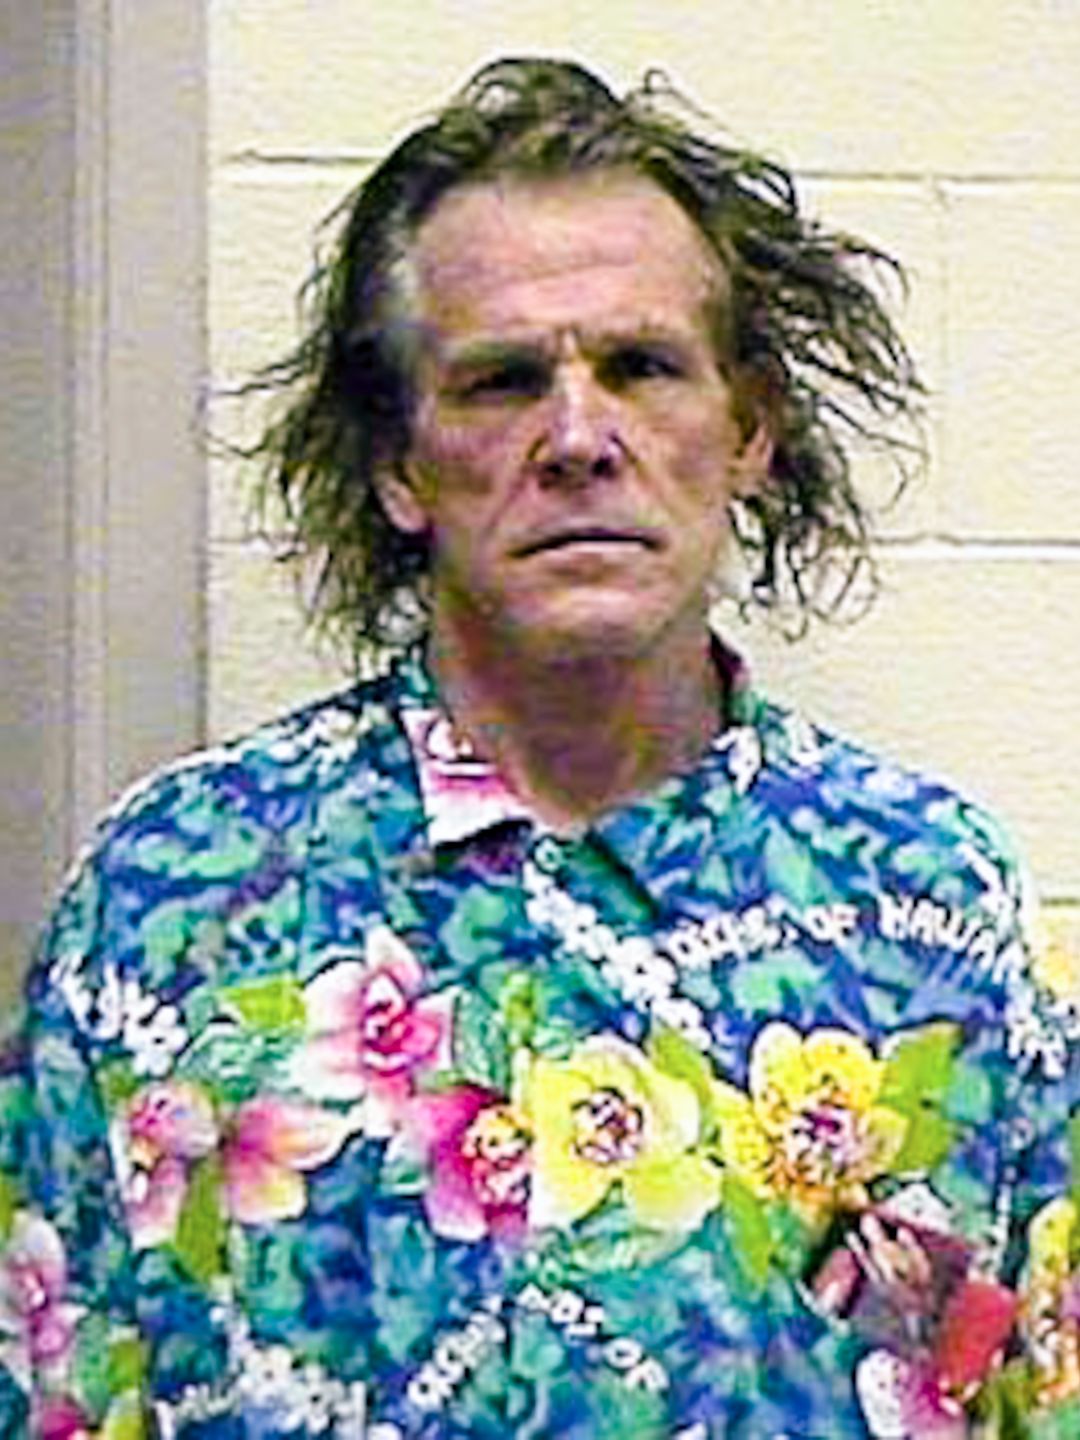 Nick Nolte in a Hawaiian floral shirt for a mugshot